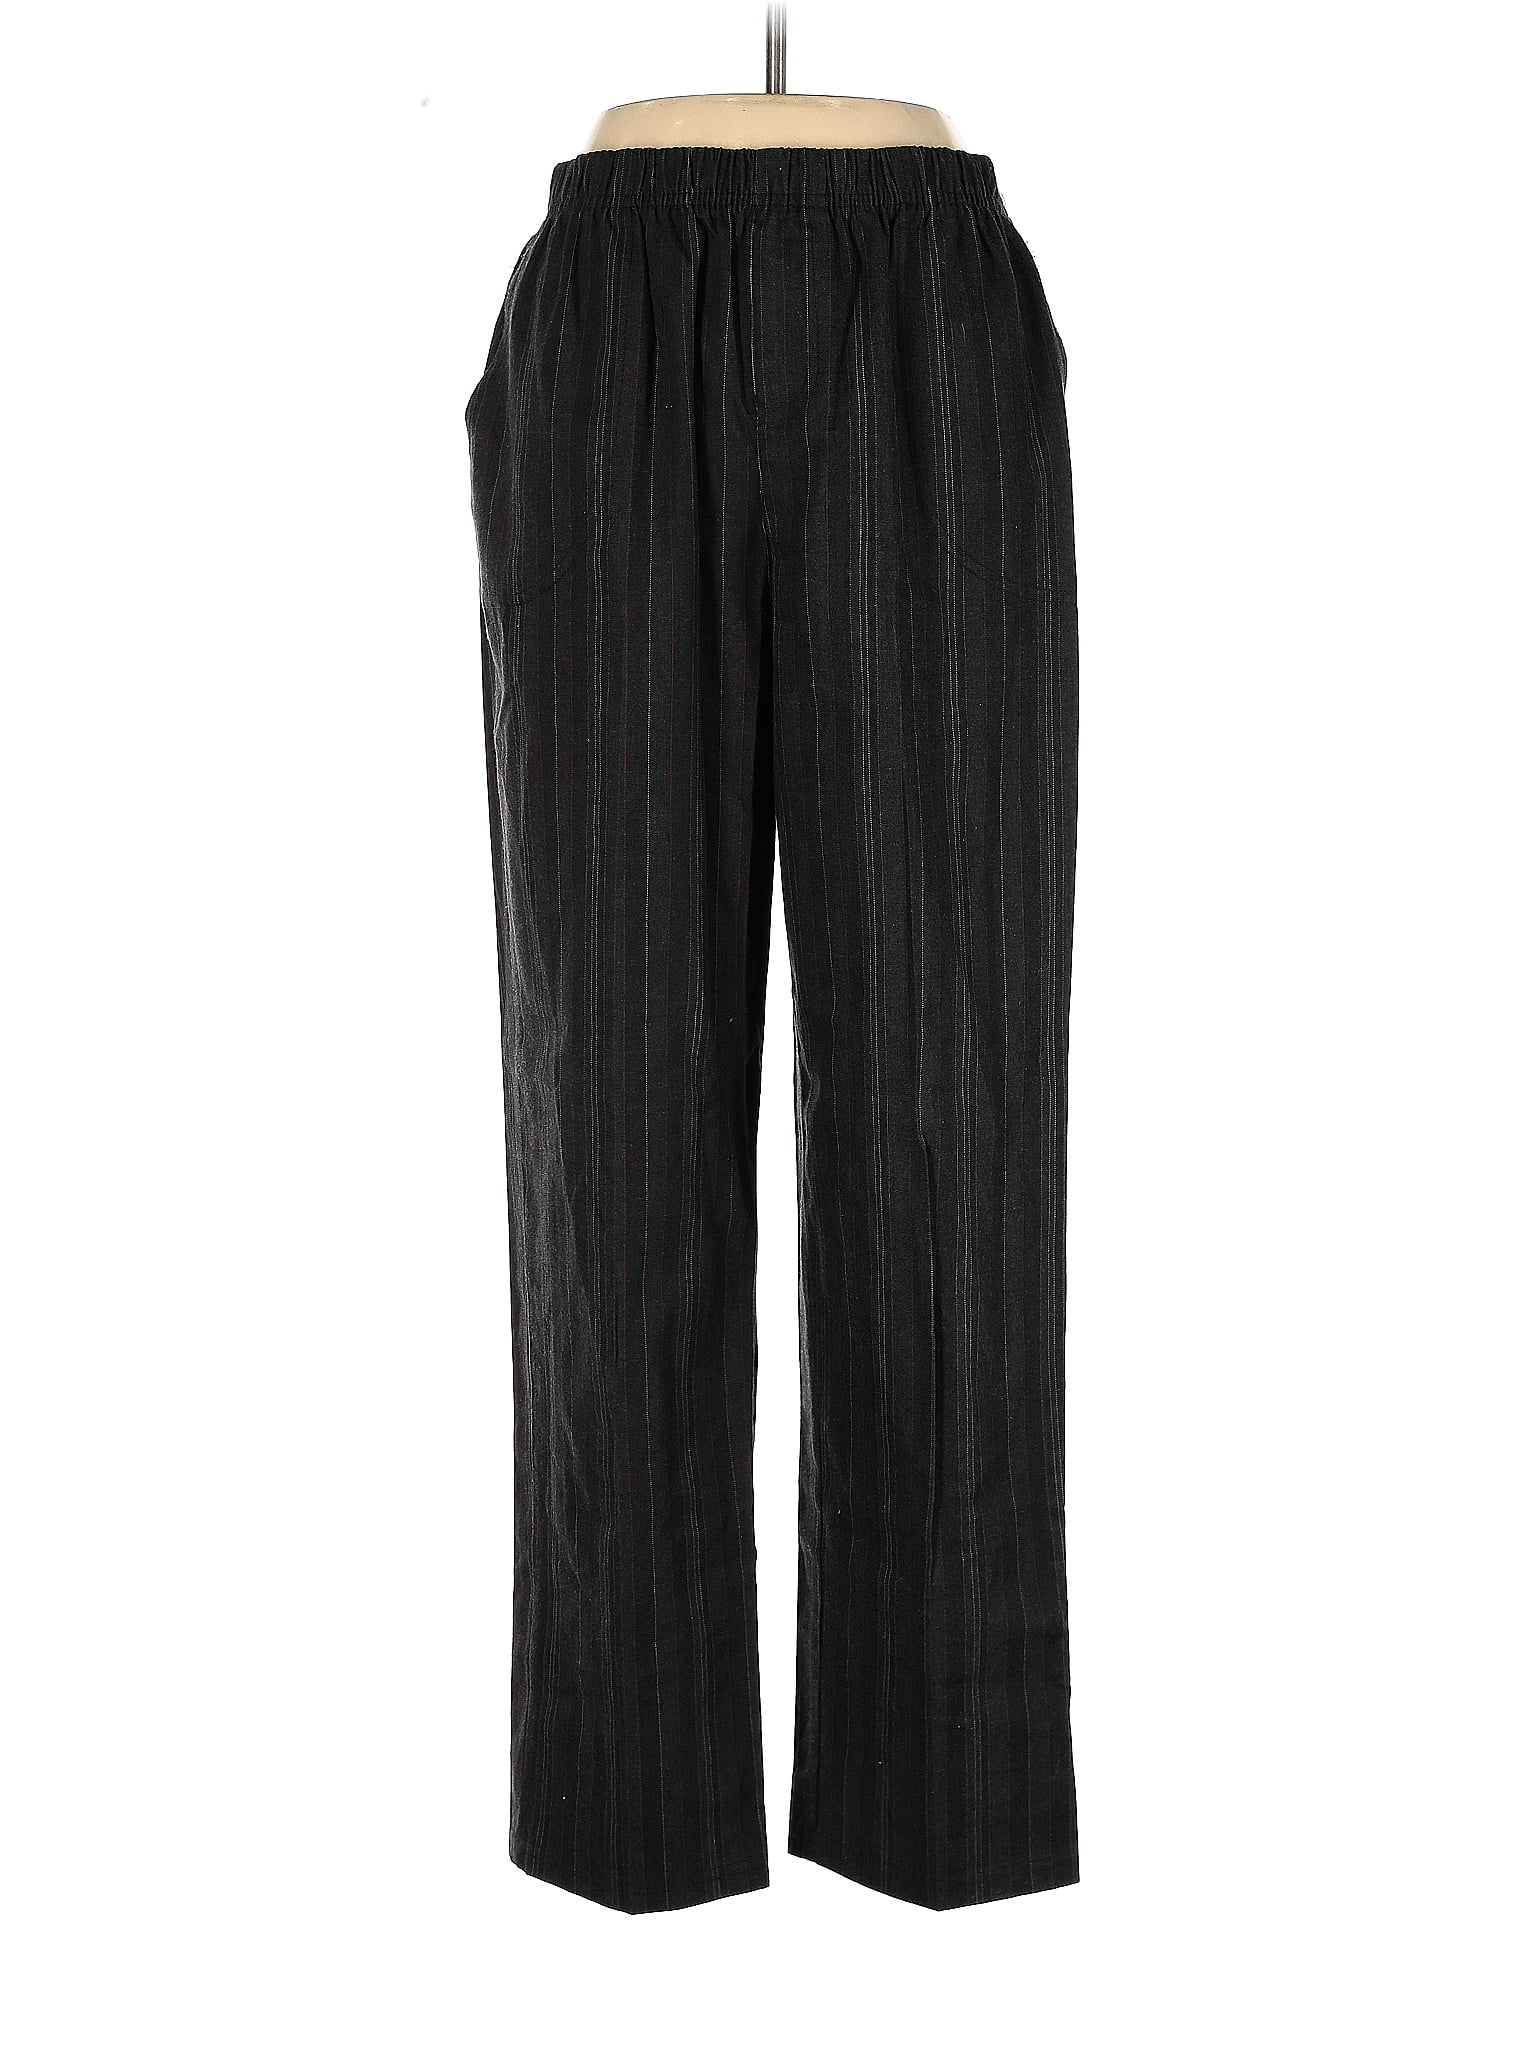 White Stag Stripes Black Dress Pants Size 6 - 46% off